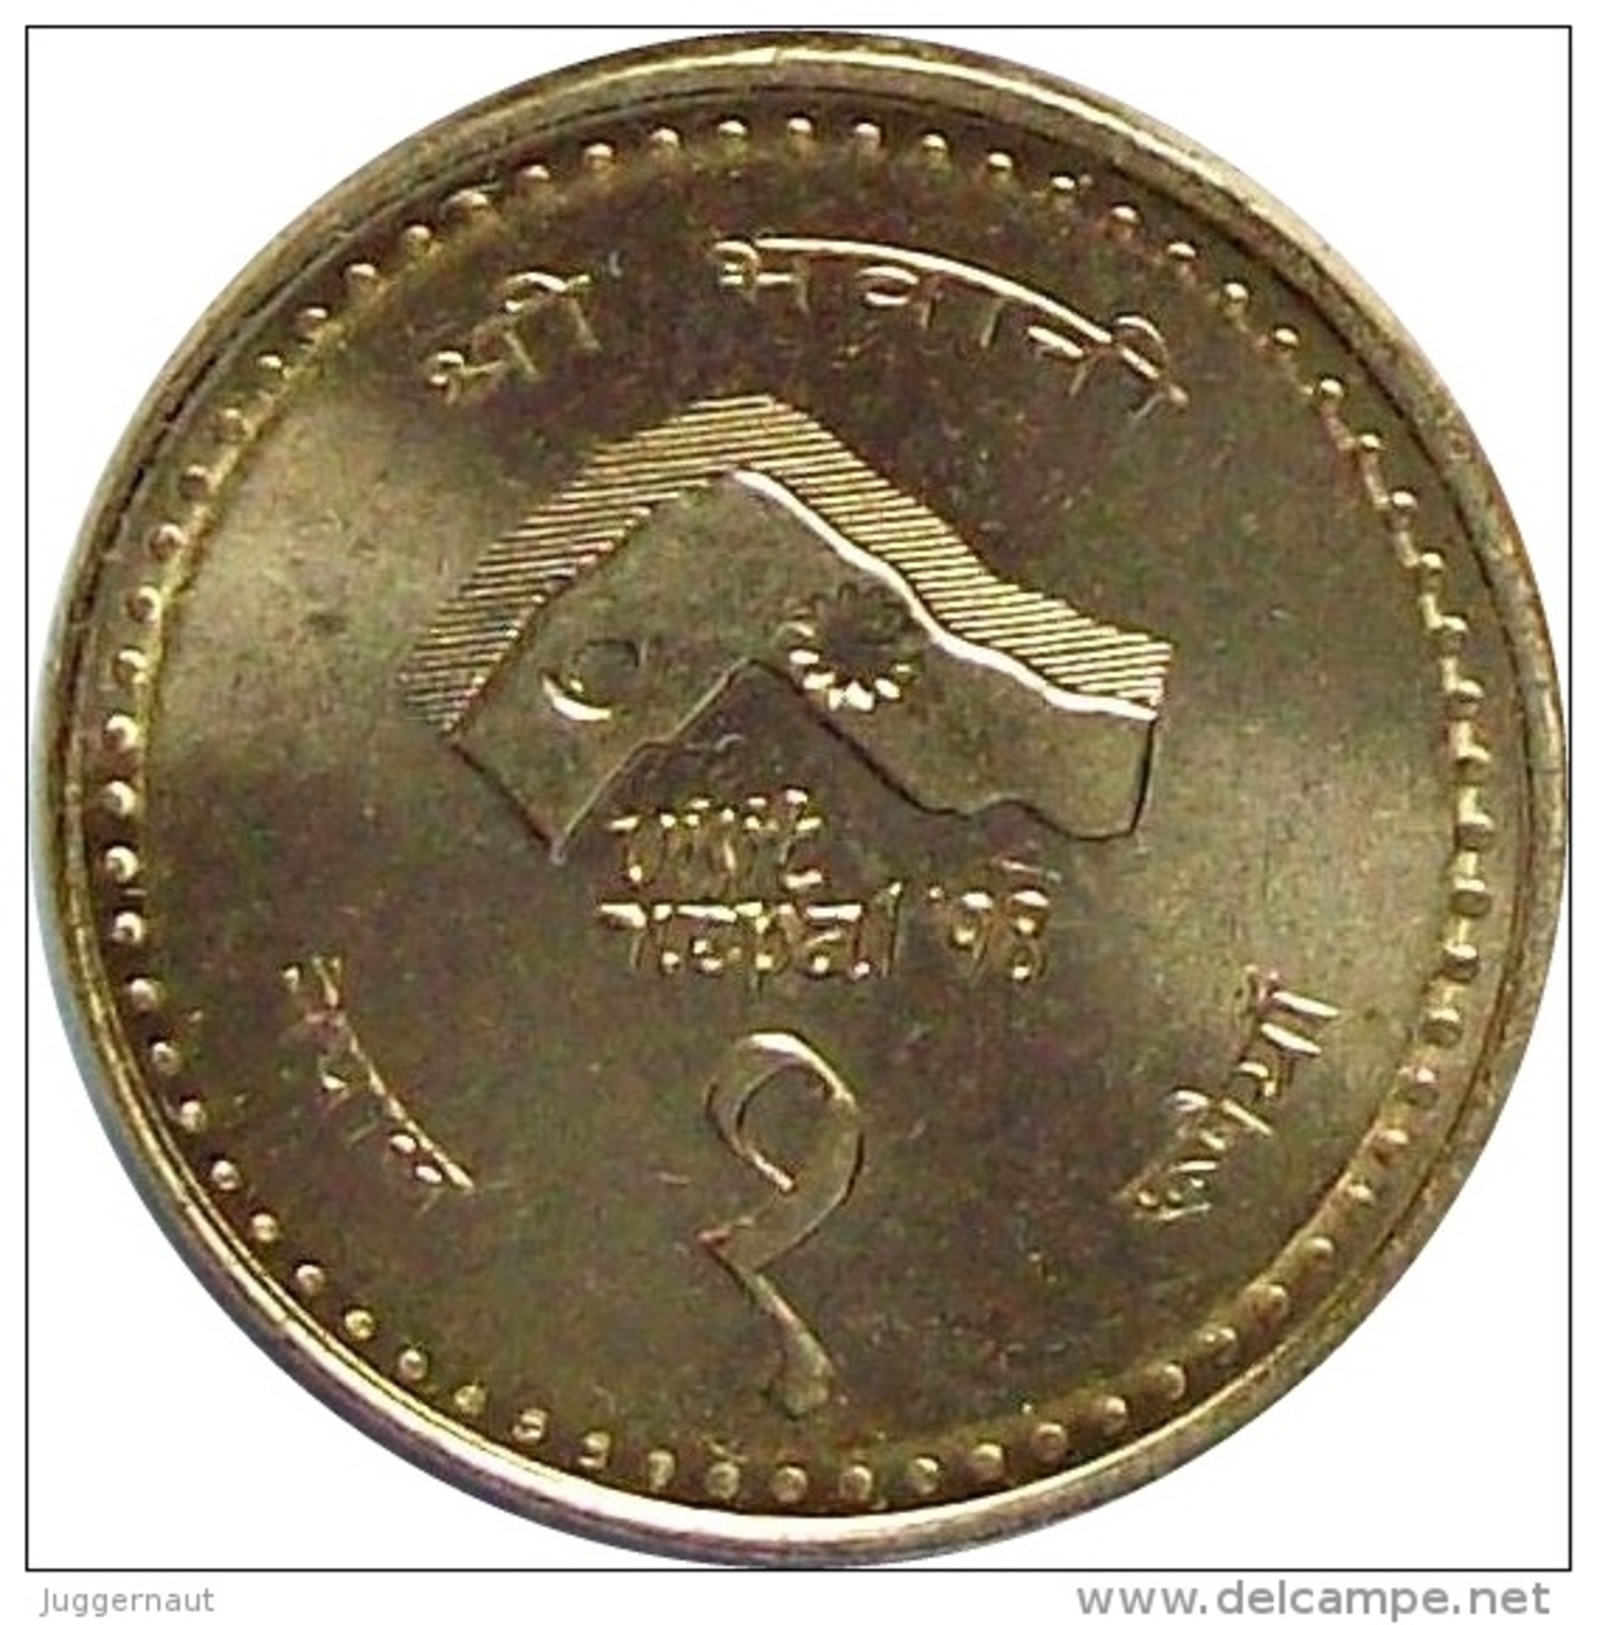 VISIT NEPAL YEAR 1998 RUPEE 1 BRASS COIN NEPAL 1997 KM-1115 UNCIRCULATED UNC - Nepal